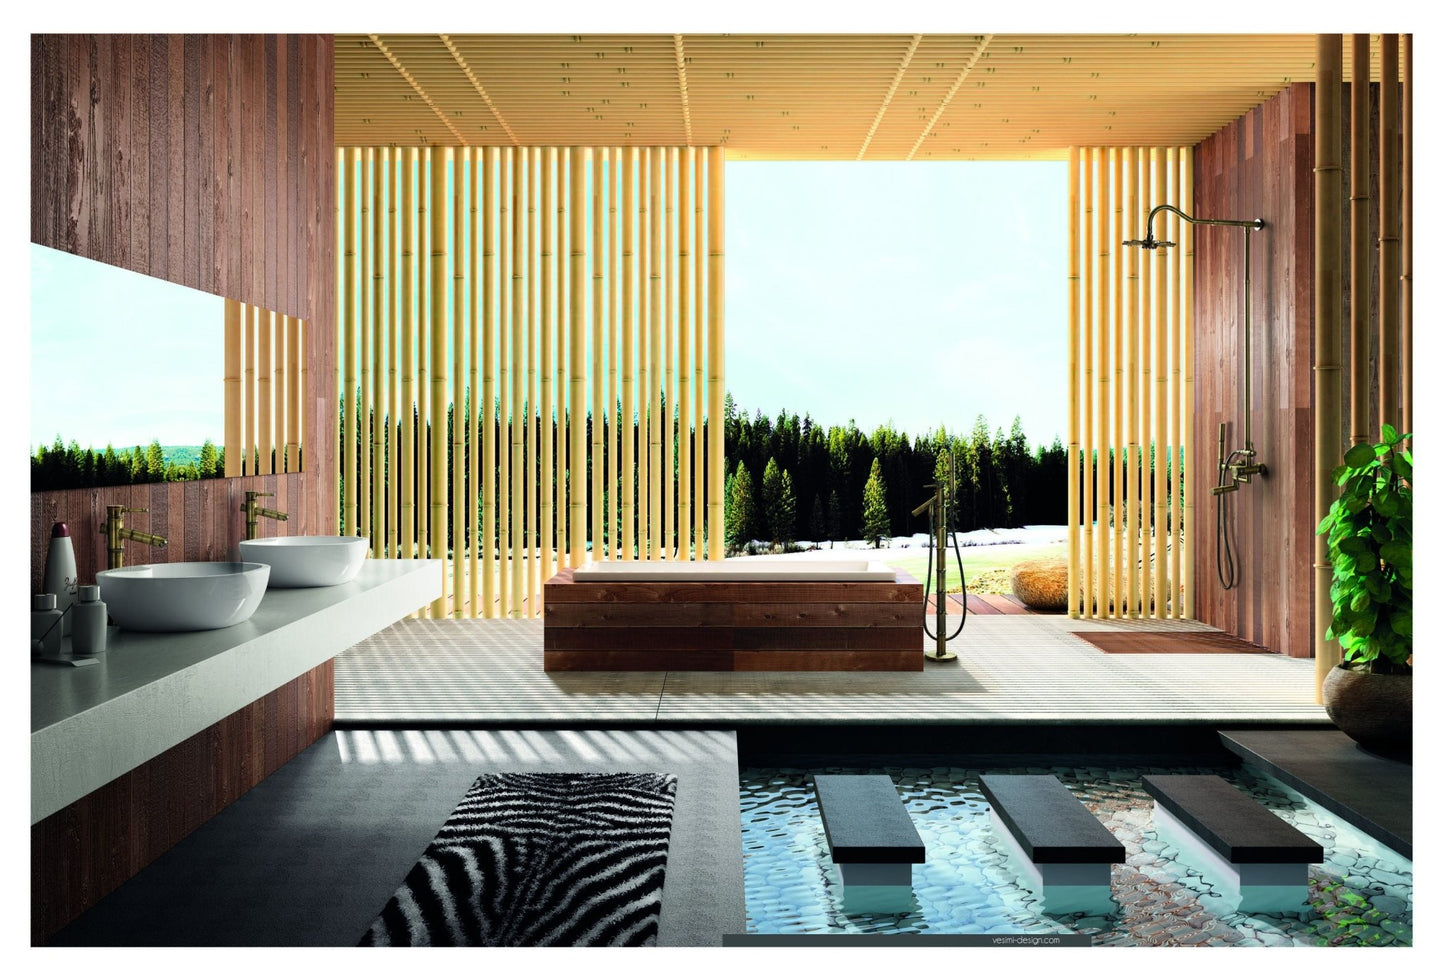 Bamboo Bronze Bathroom Accessories Double Towel Hook - |VESIMI Design| Luxury and Rustic bathrooms online